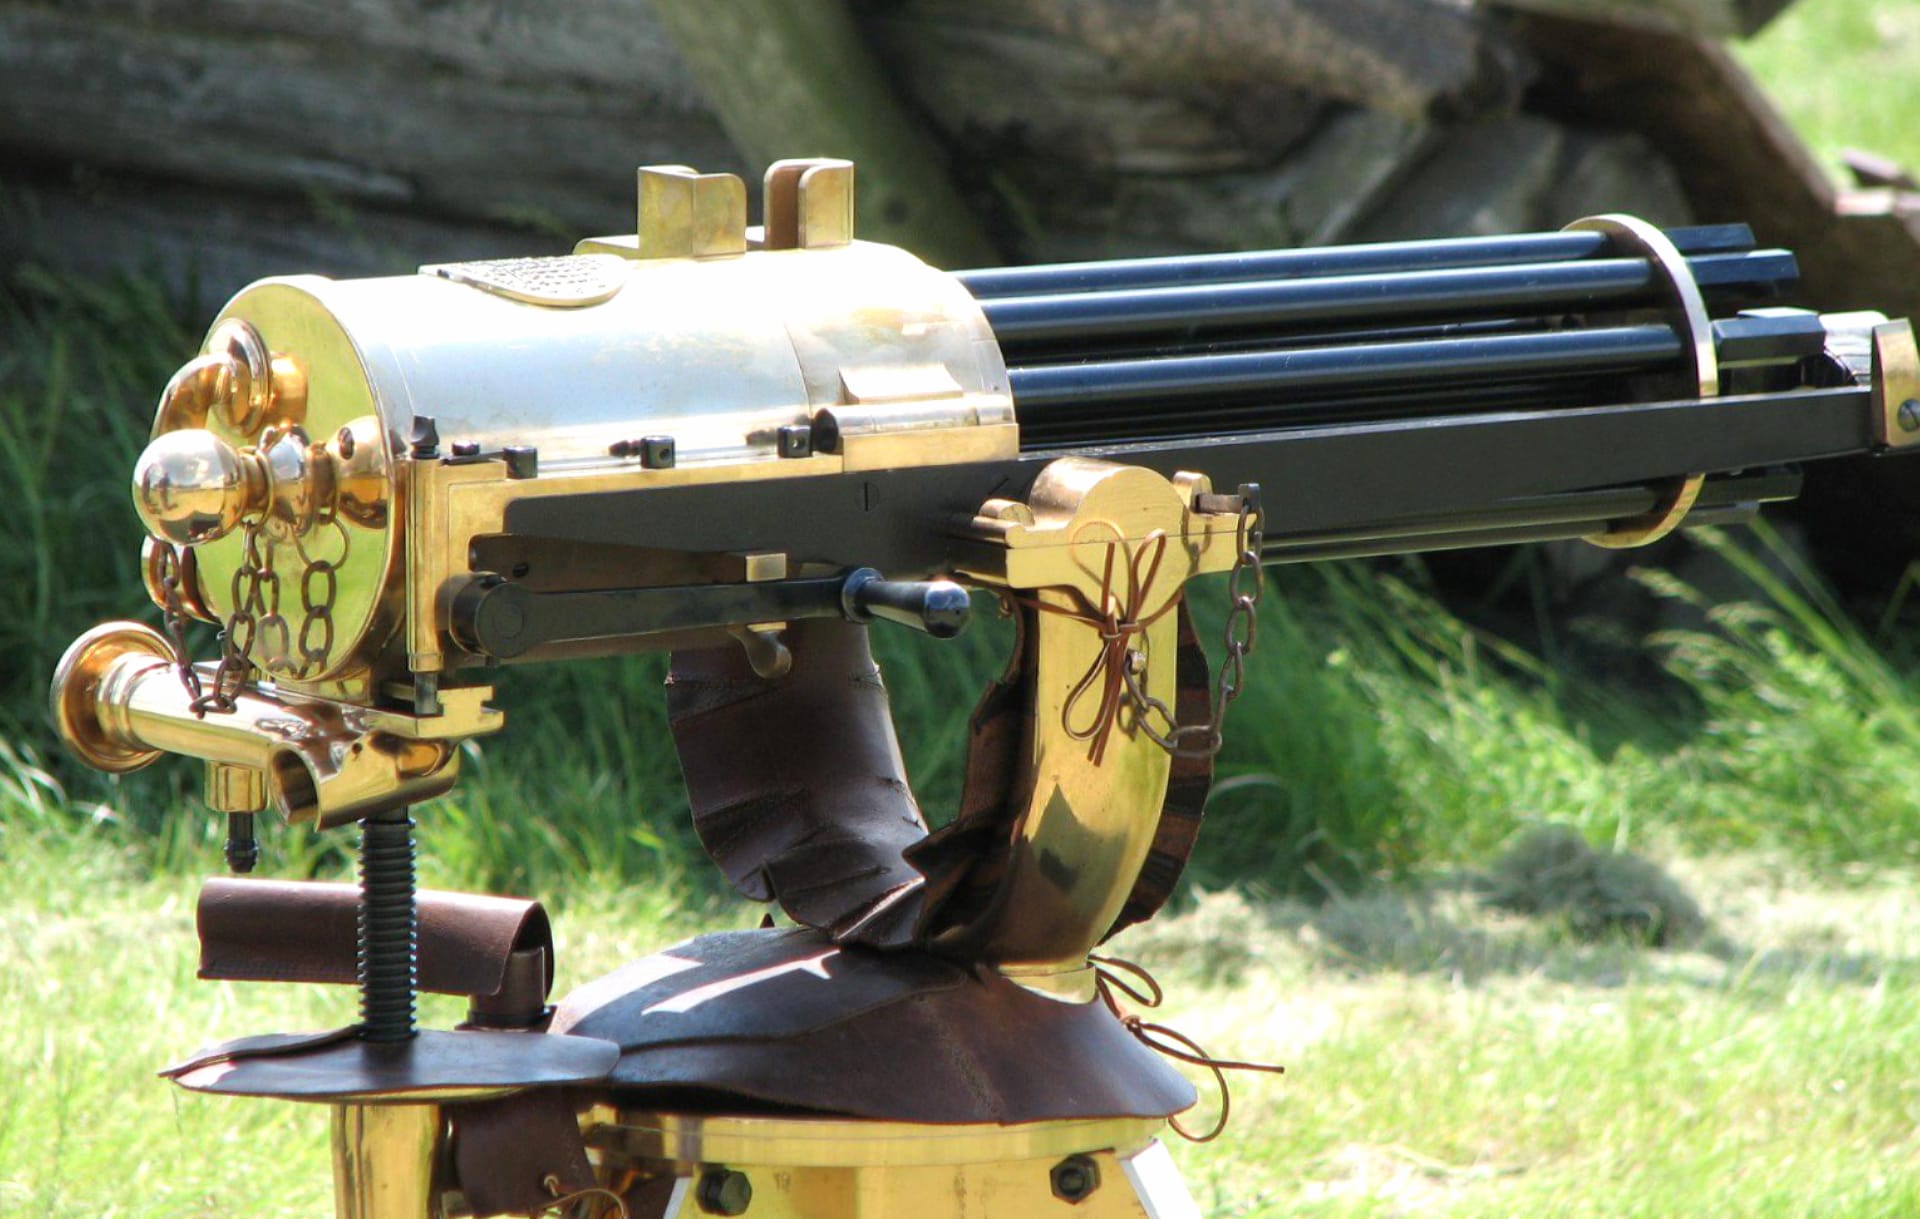 1874 Gatling gun at 1280 x 960 size wallpapers HD quality